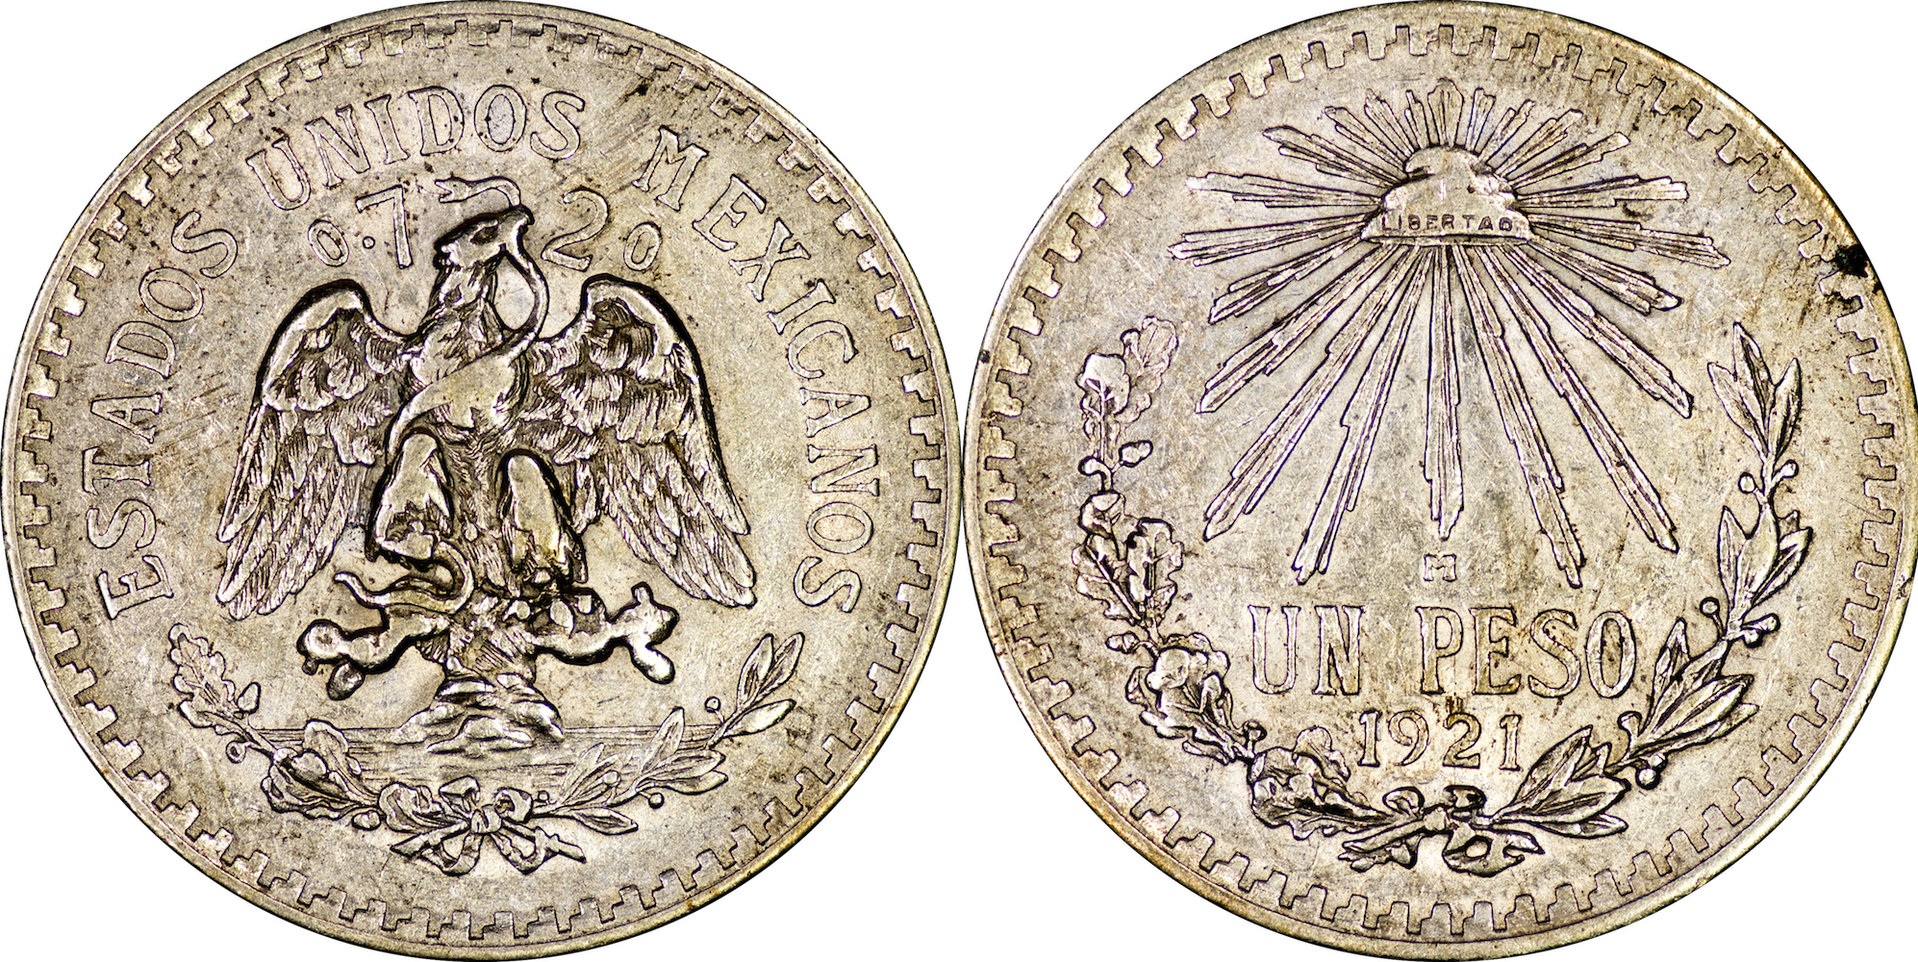 Mexico - 1921 1 Peso.jpg